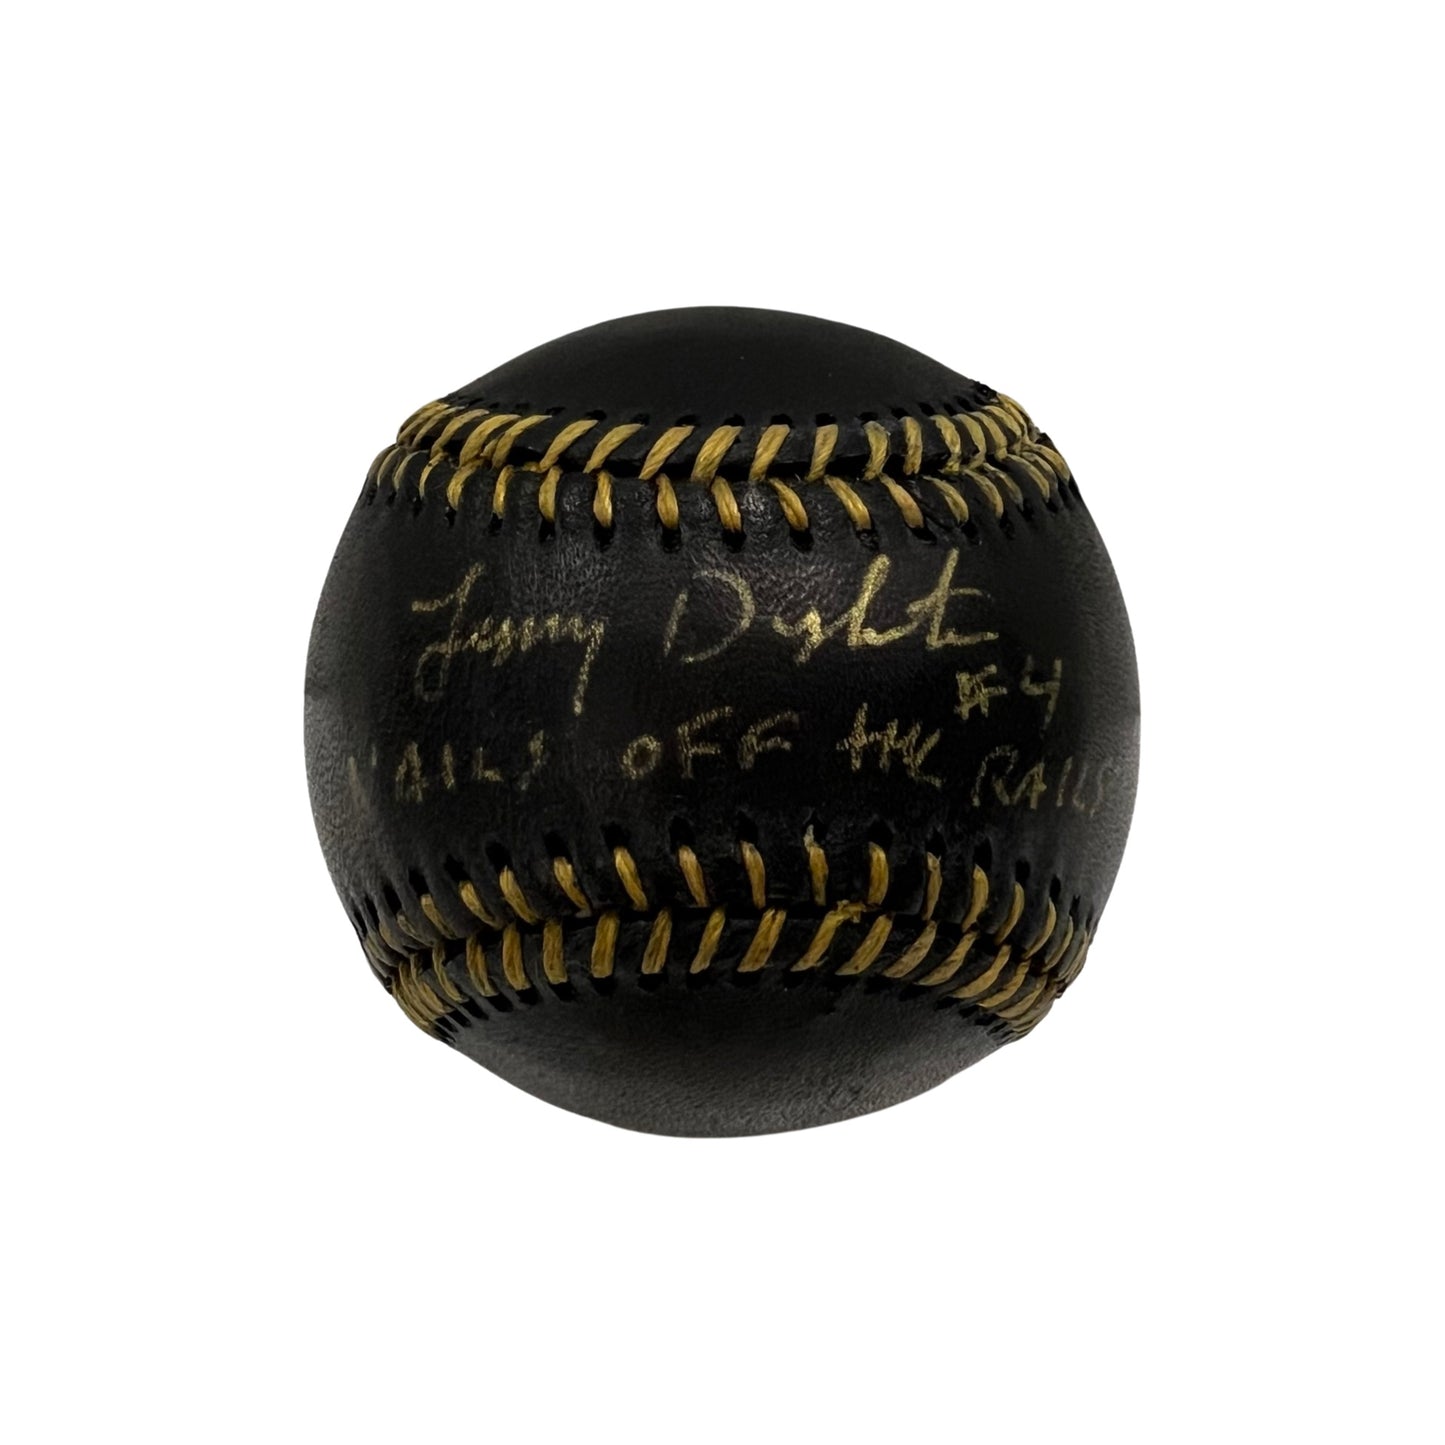 Lenny Dykstra Autographed Black Leather Baseball “Nails Off the Rails” Inscription JSA